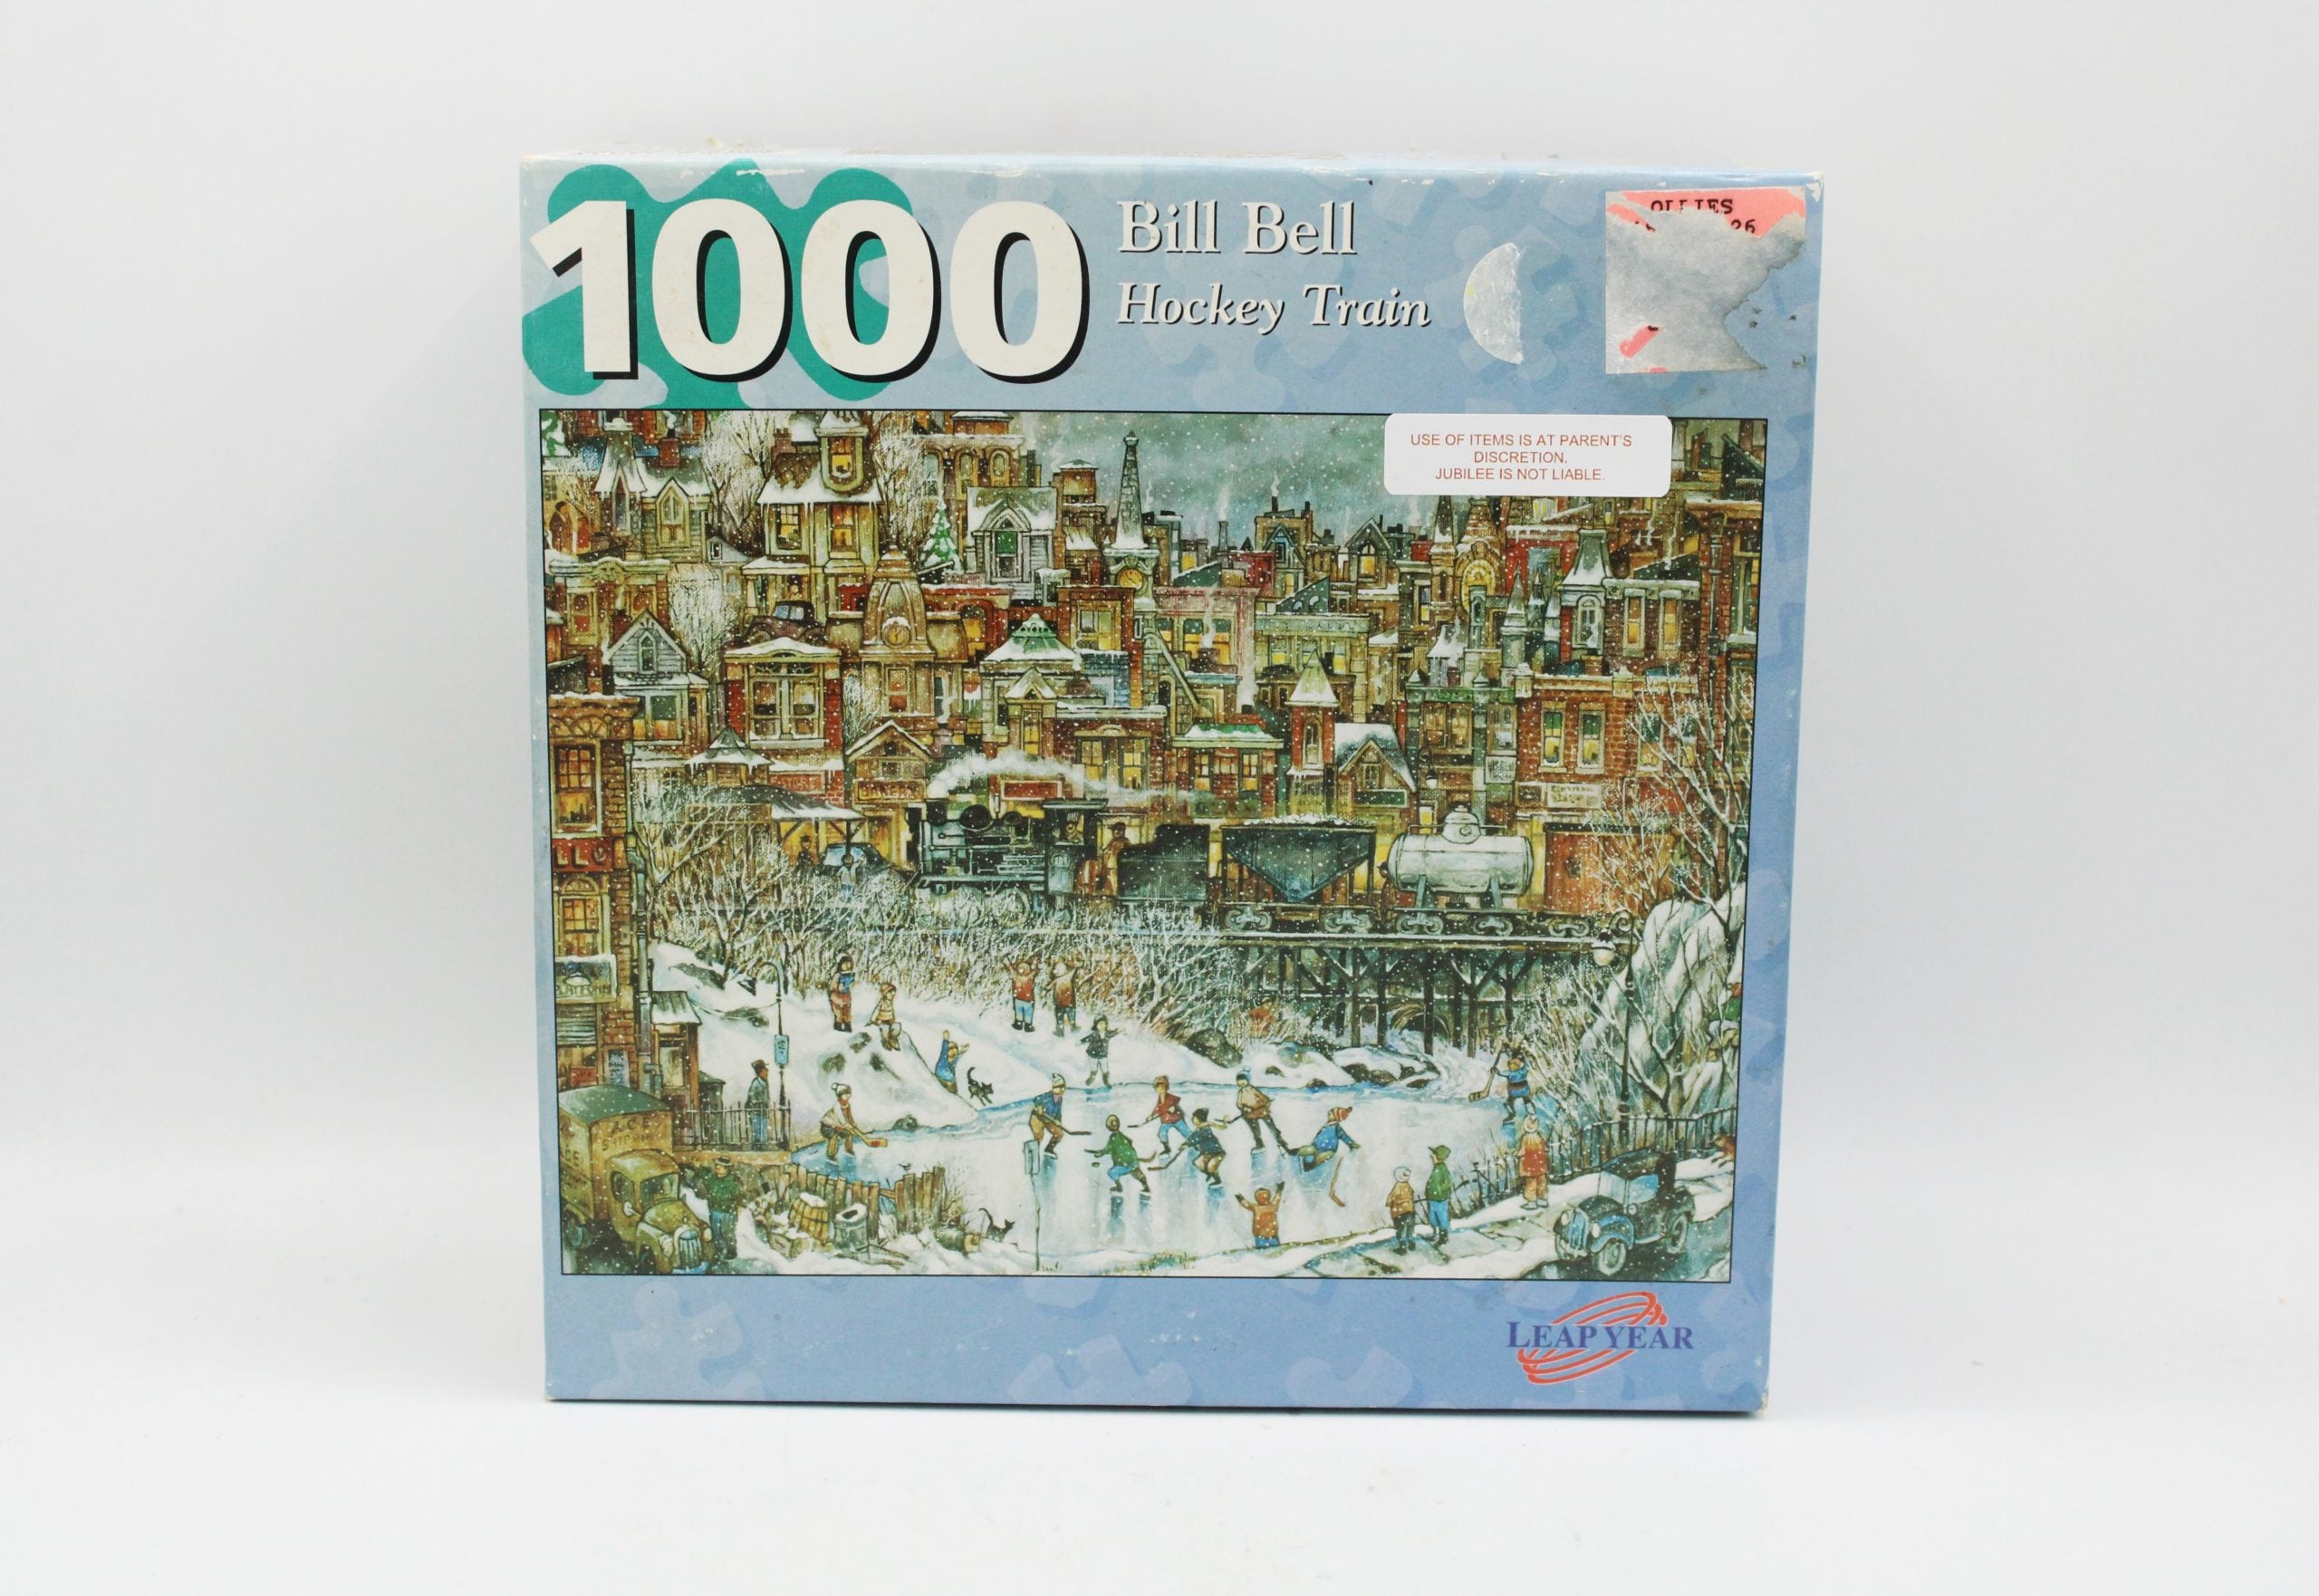 Bill Bell Hockey Train 1000 Piece Puzzle